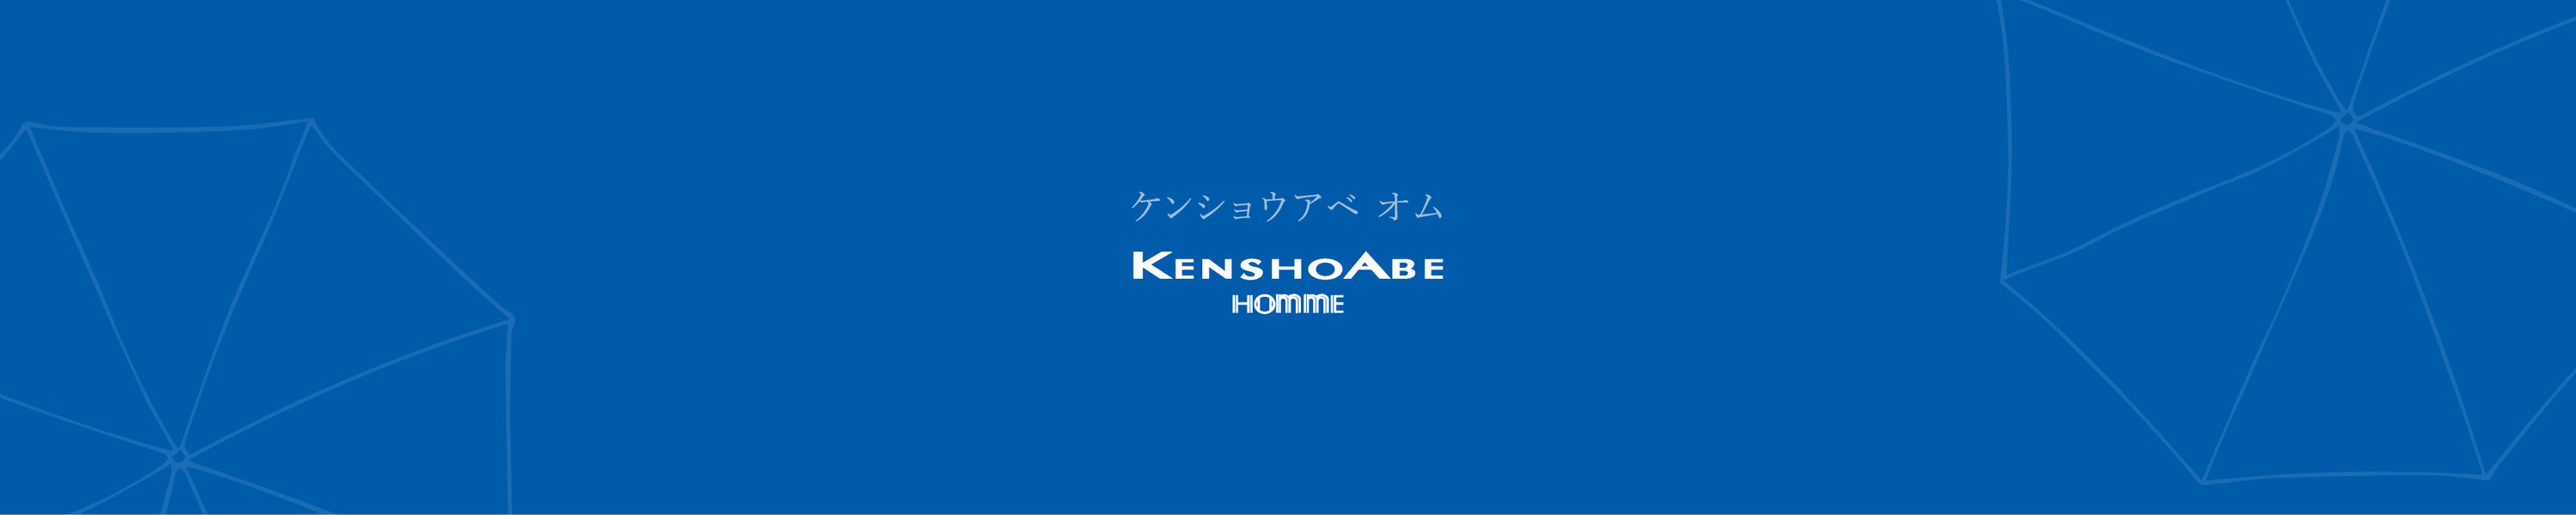 KENSHO ABE HOMME